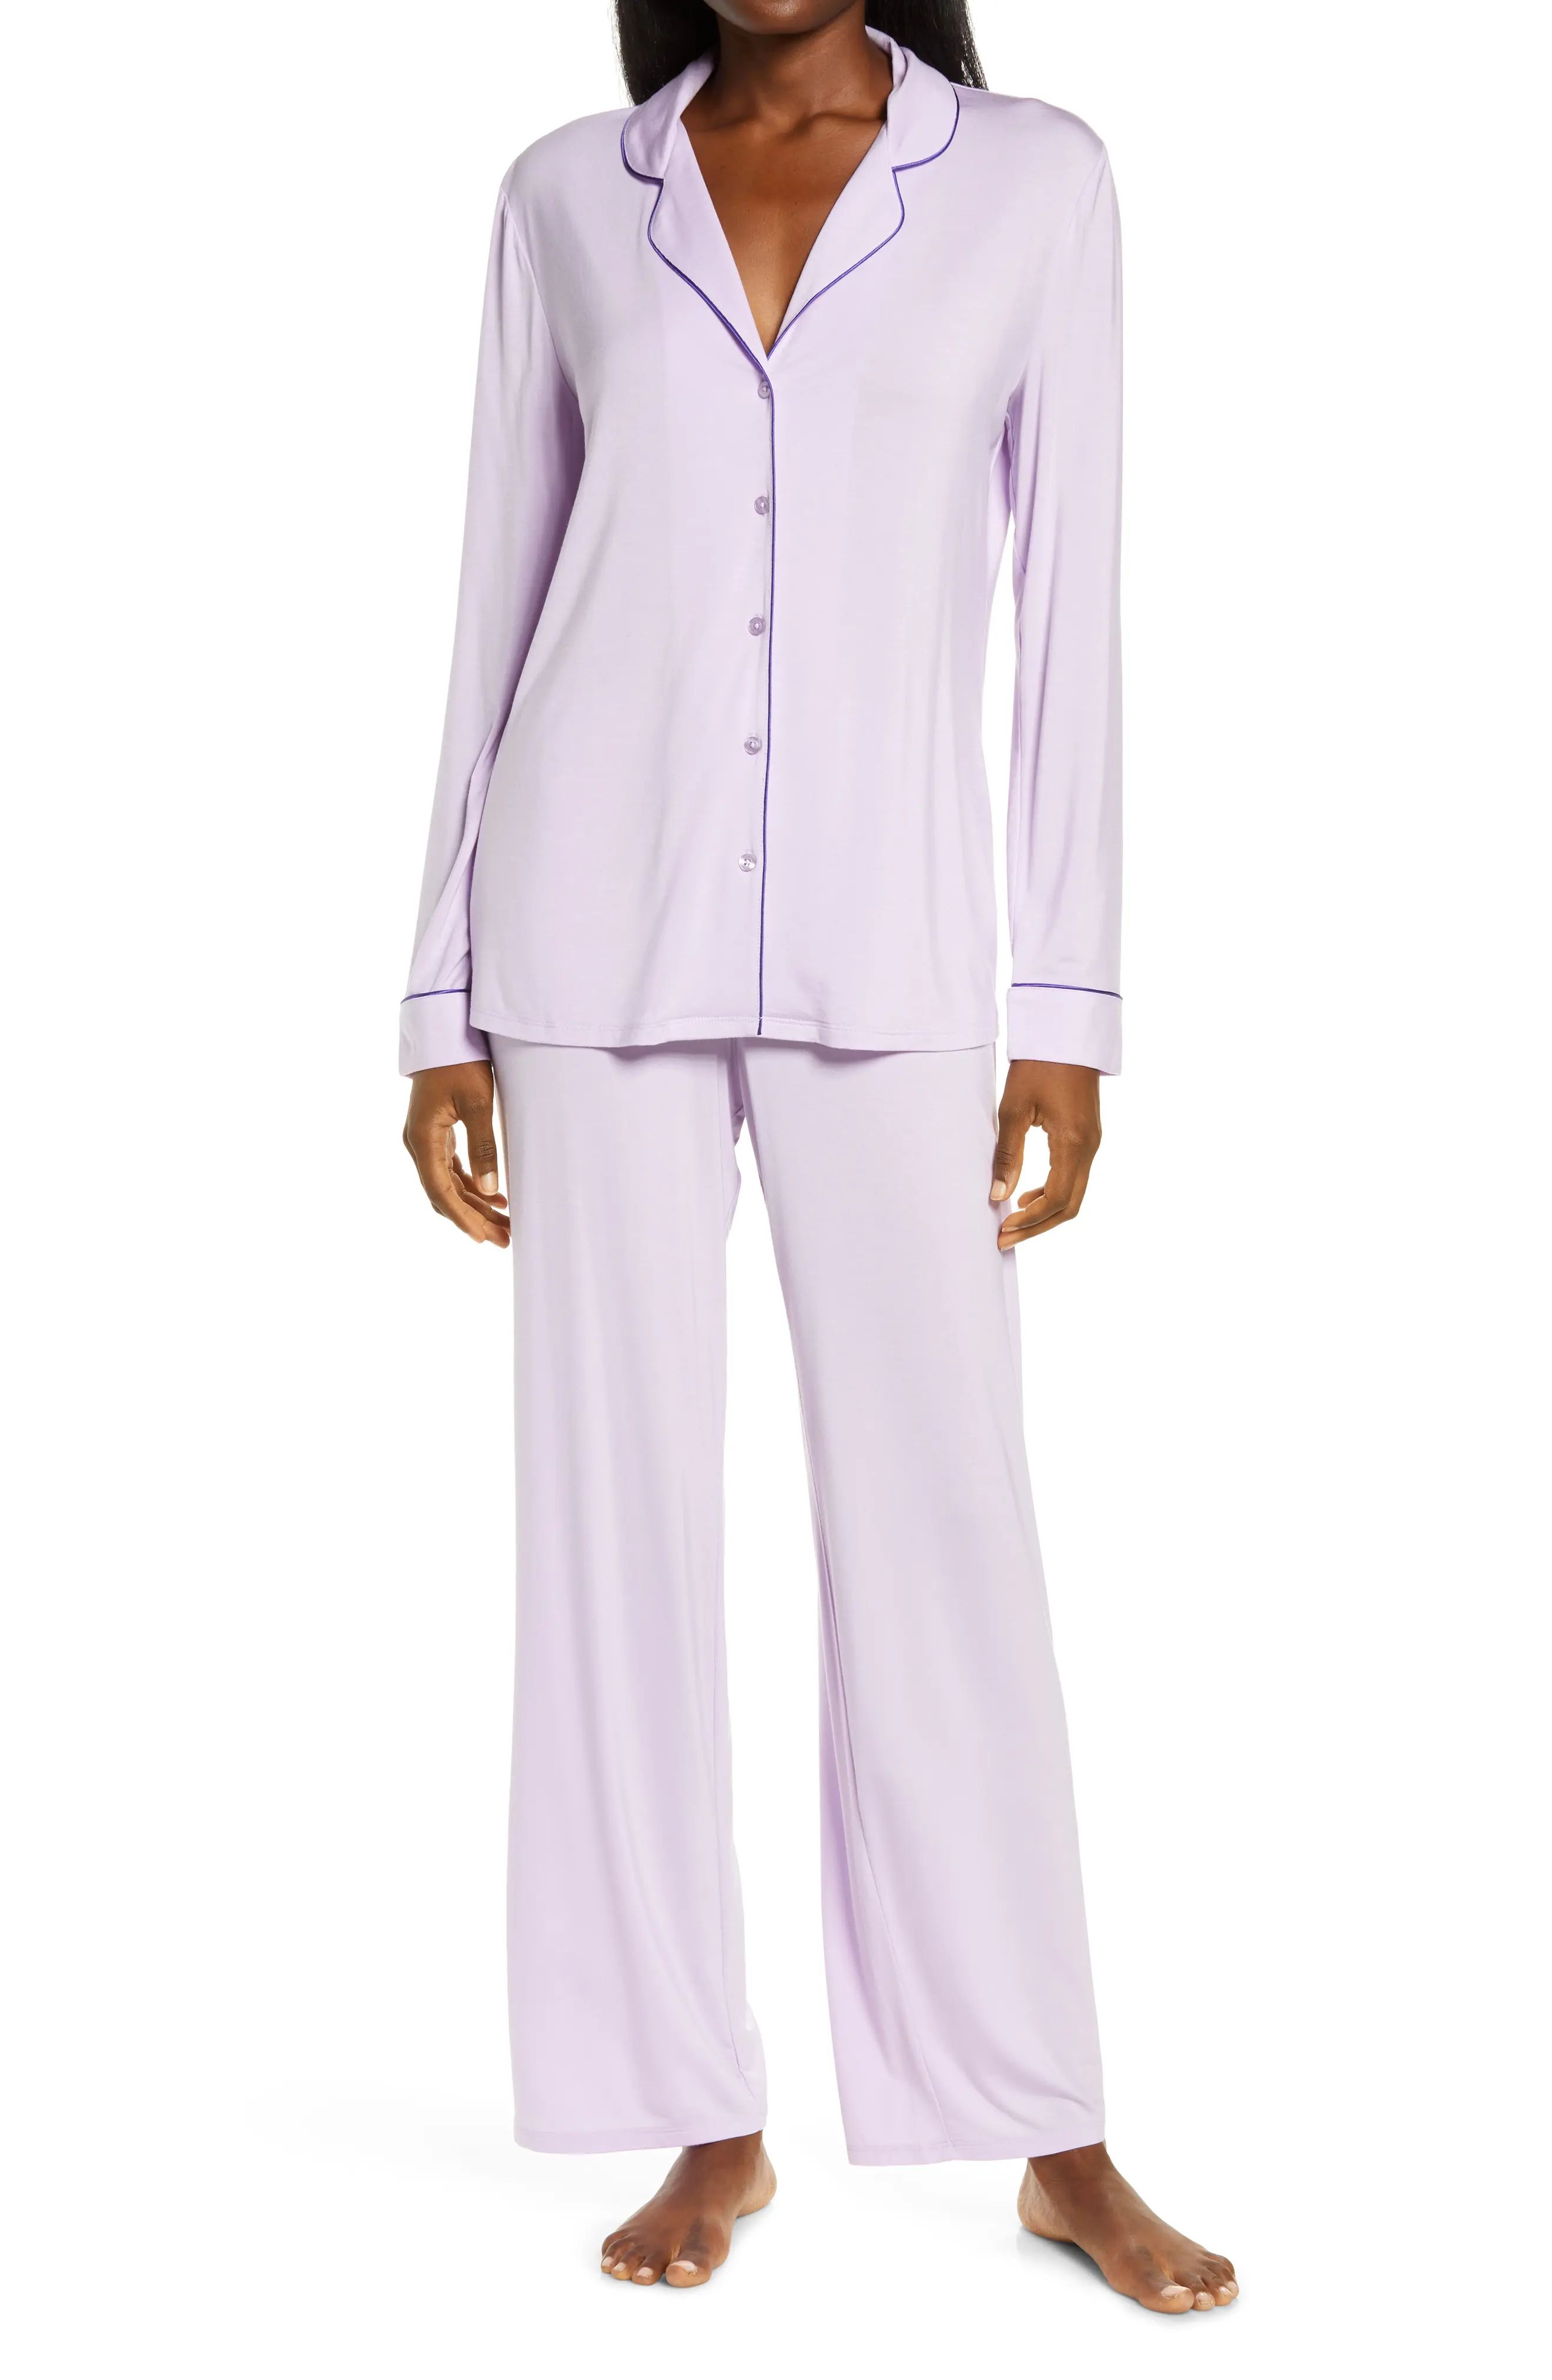 Nordstrom Lingerie Moonlight Pajamas in Purple Bloom at Nordstrom, Size Medium | Nordstrom